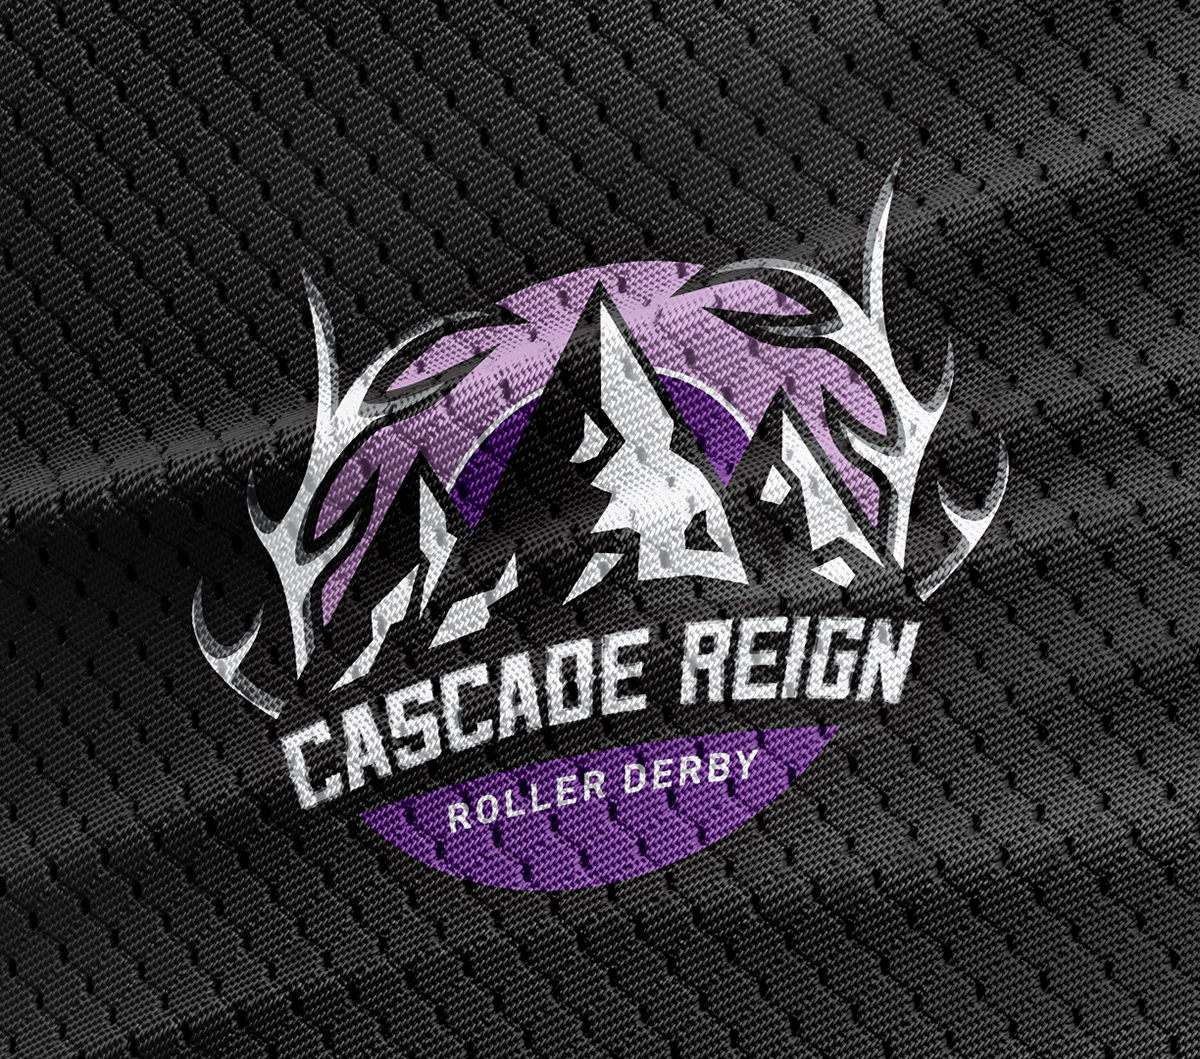 cascade reign cascade reign Roller Derby logo Sports logo team logo anacortes Washington